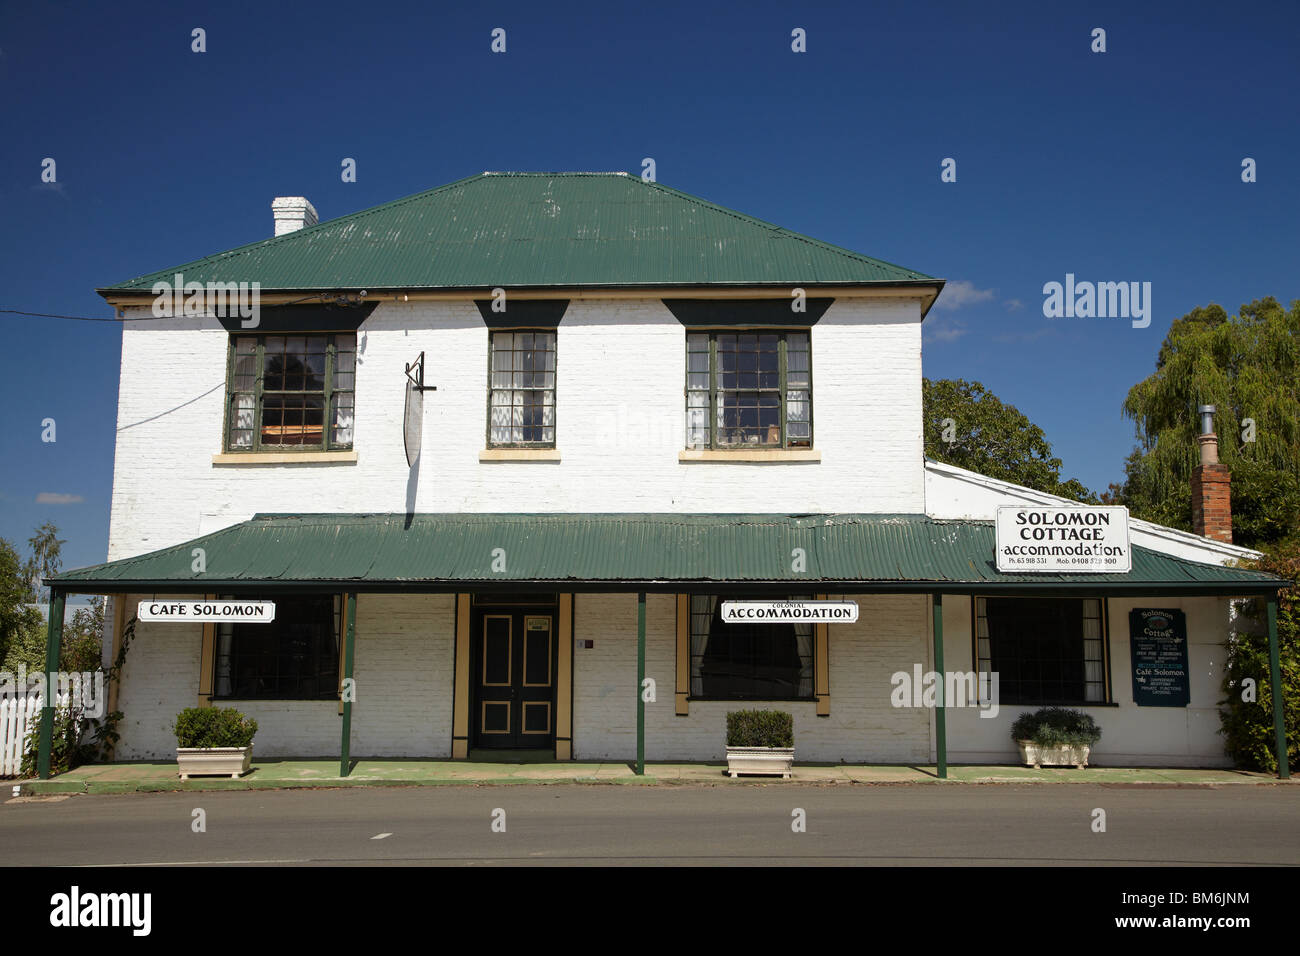 Solomon Cottage Accommodation (1836), Evandale, near Launceston, Northern Tasmania, Australia Stock Photo